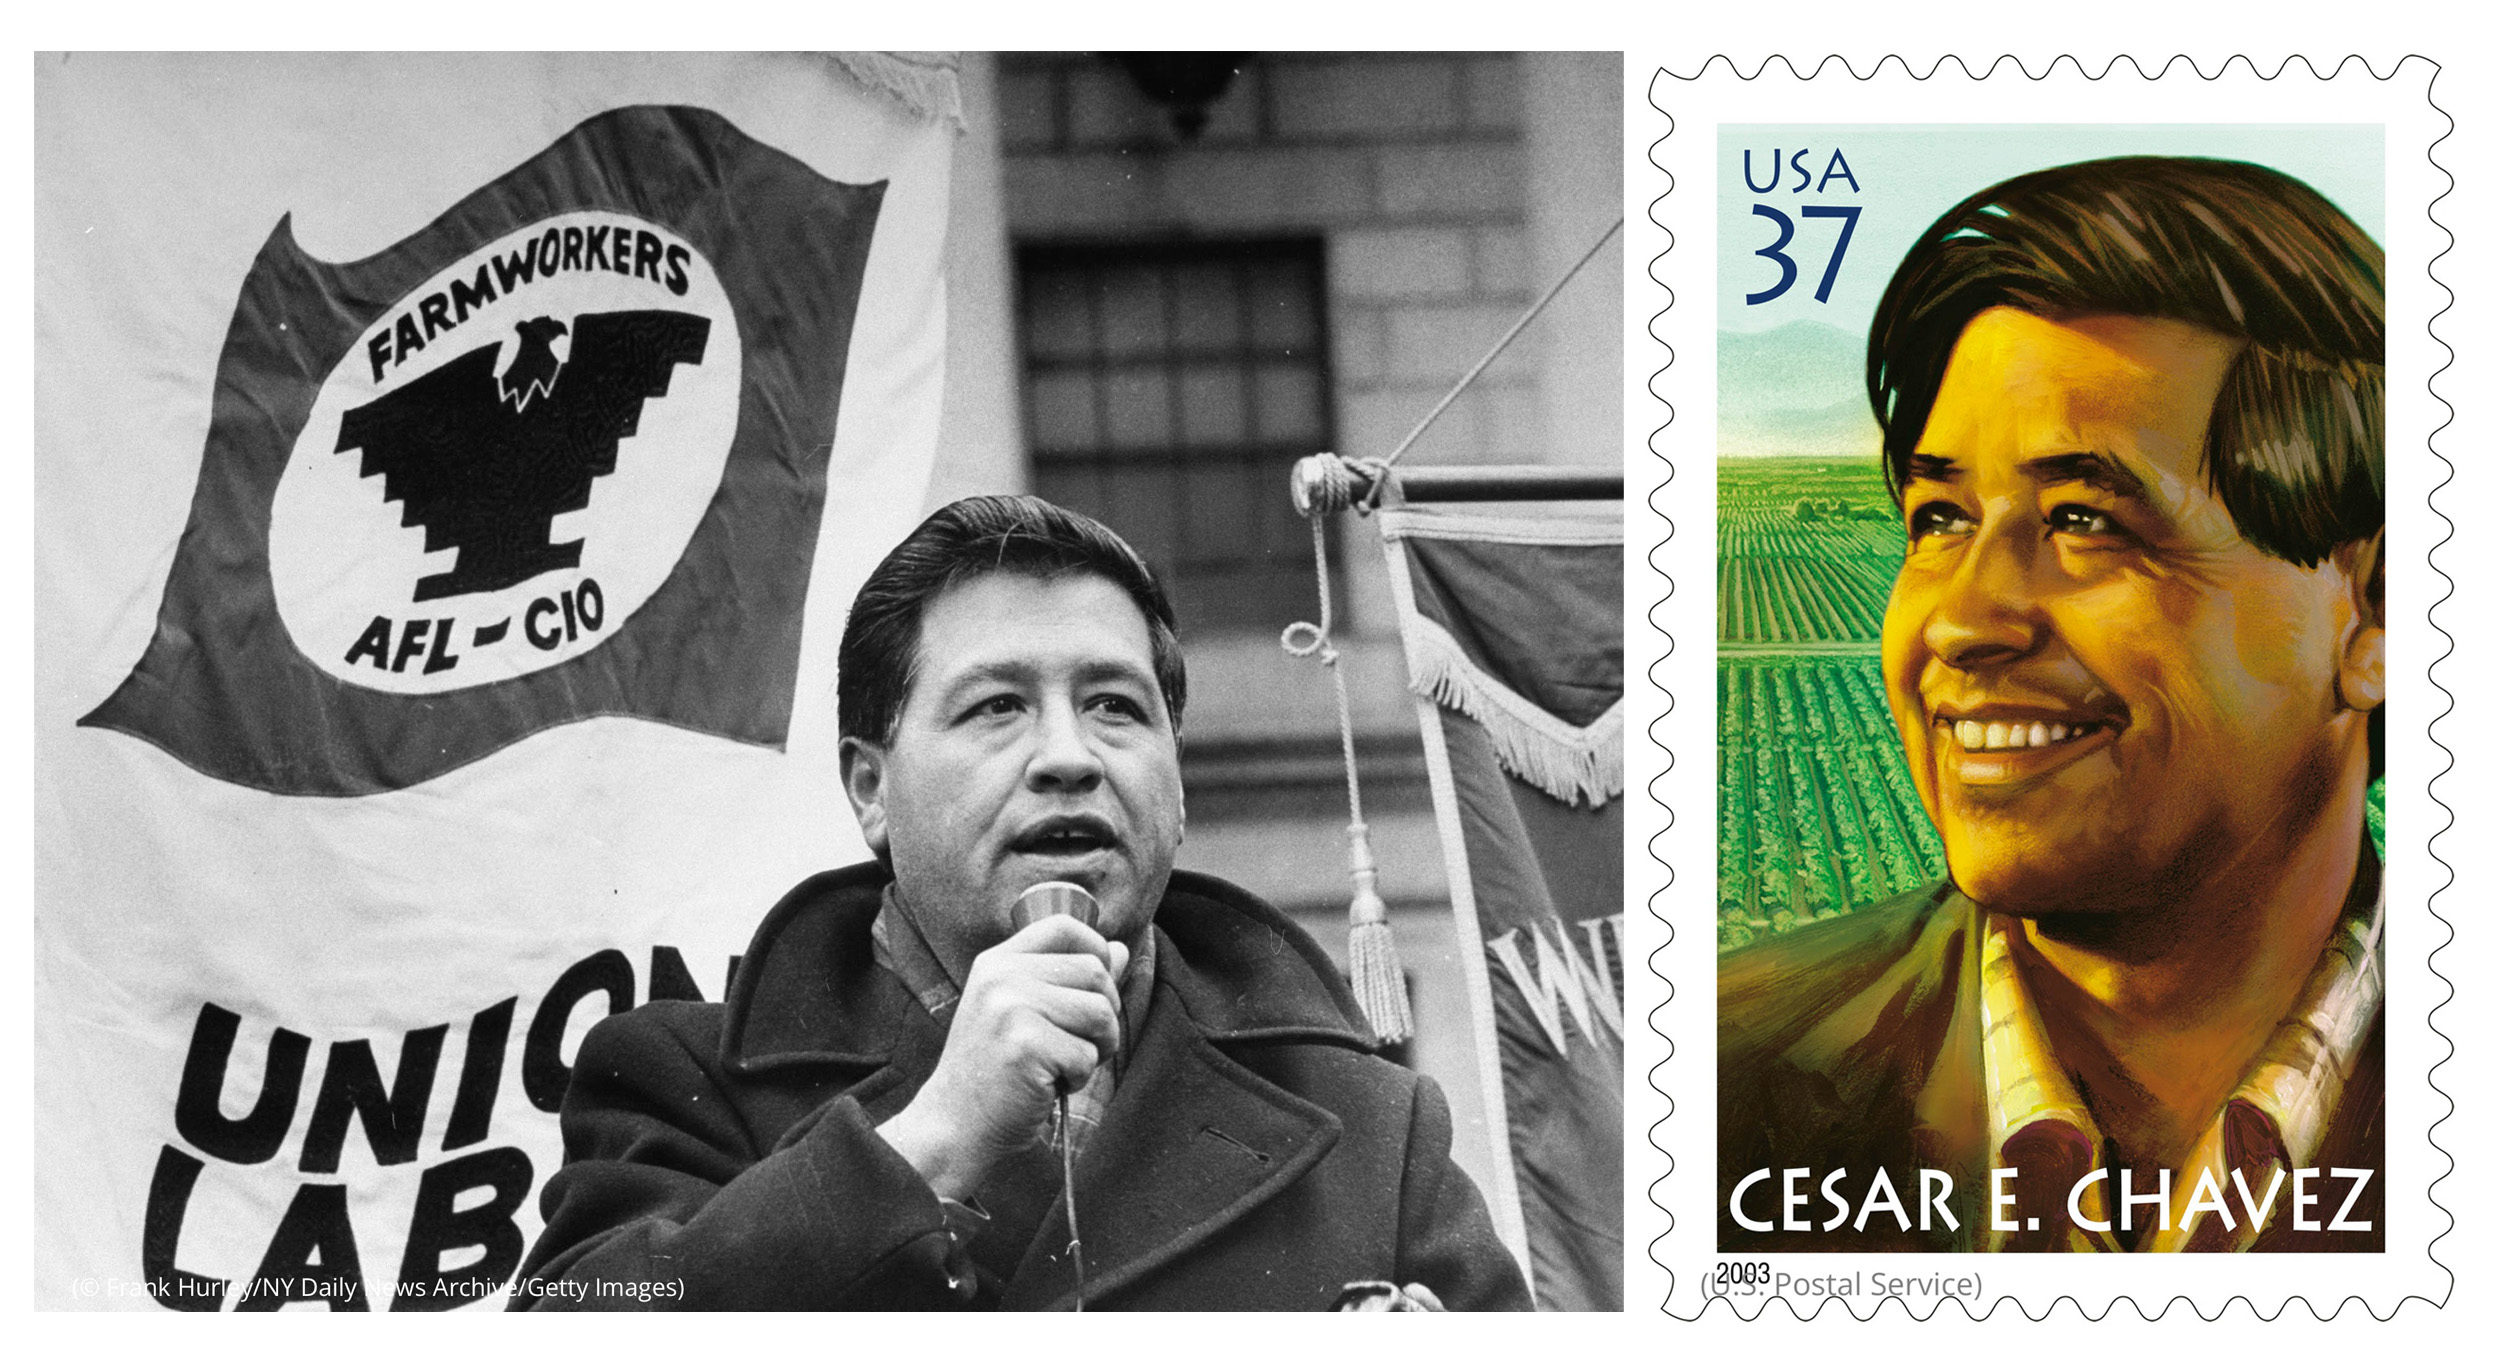 Left photo: César Chávez speaking to demonstrators (© Frank Hurley/NY Daily News Archive/Getty Images) Right image: César Chávez stamp (U.S. Postal Service)